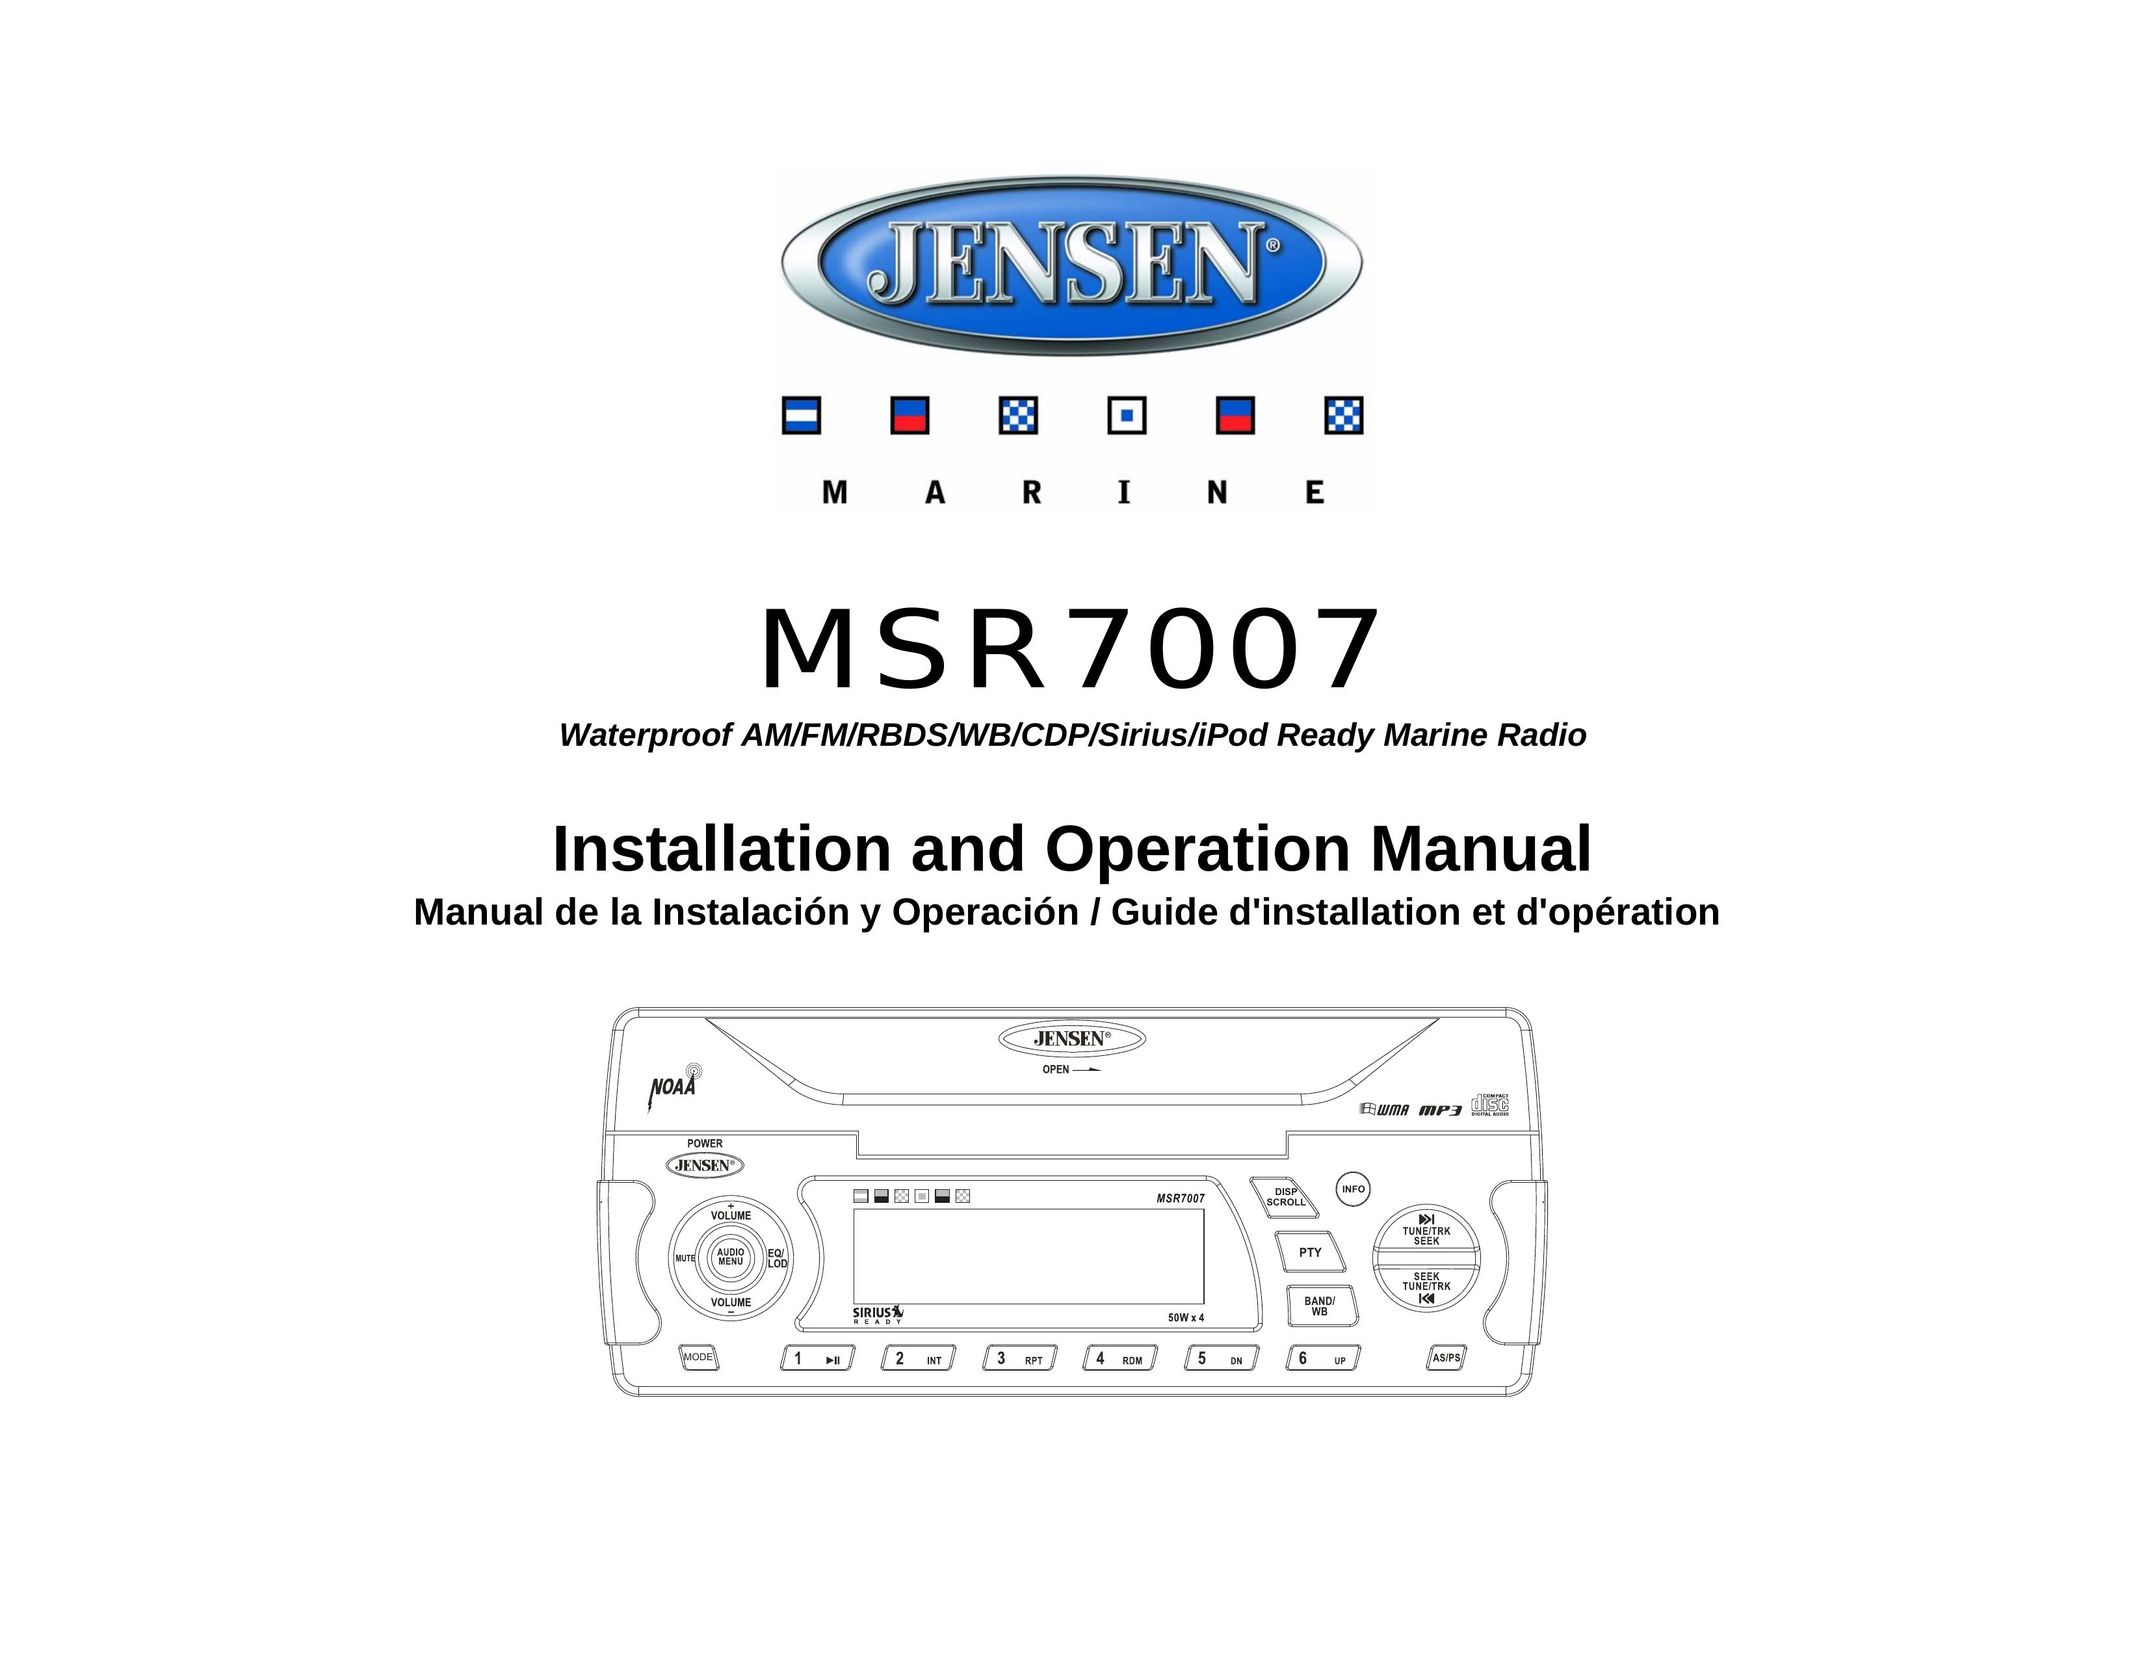 Jensen MSR7007 Router User Manual